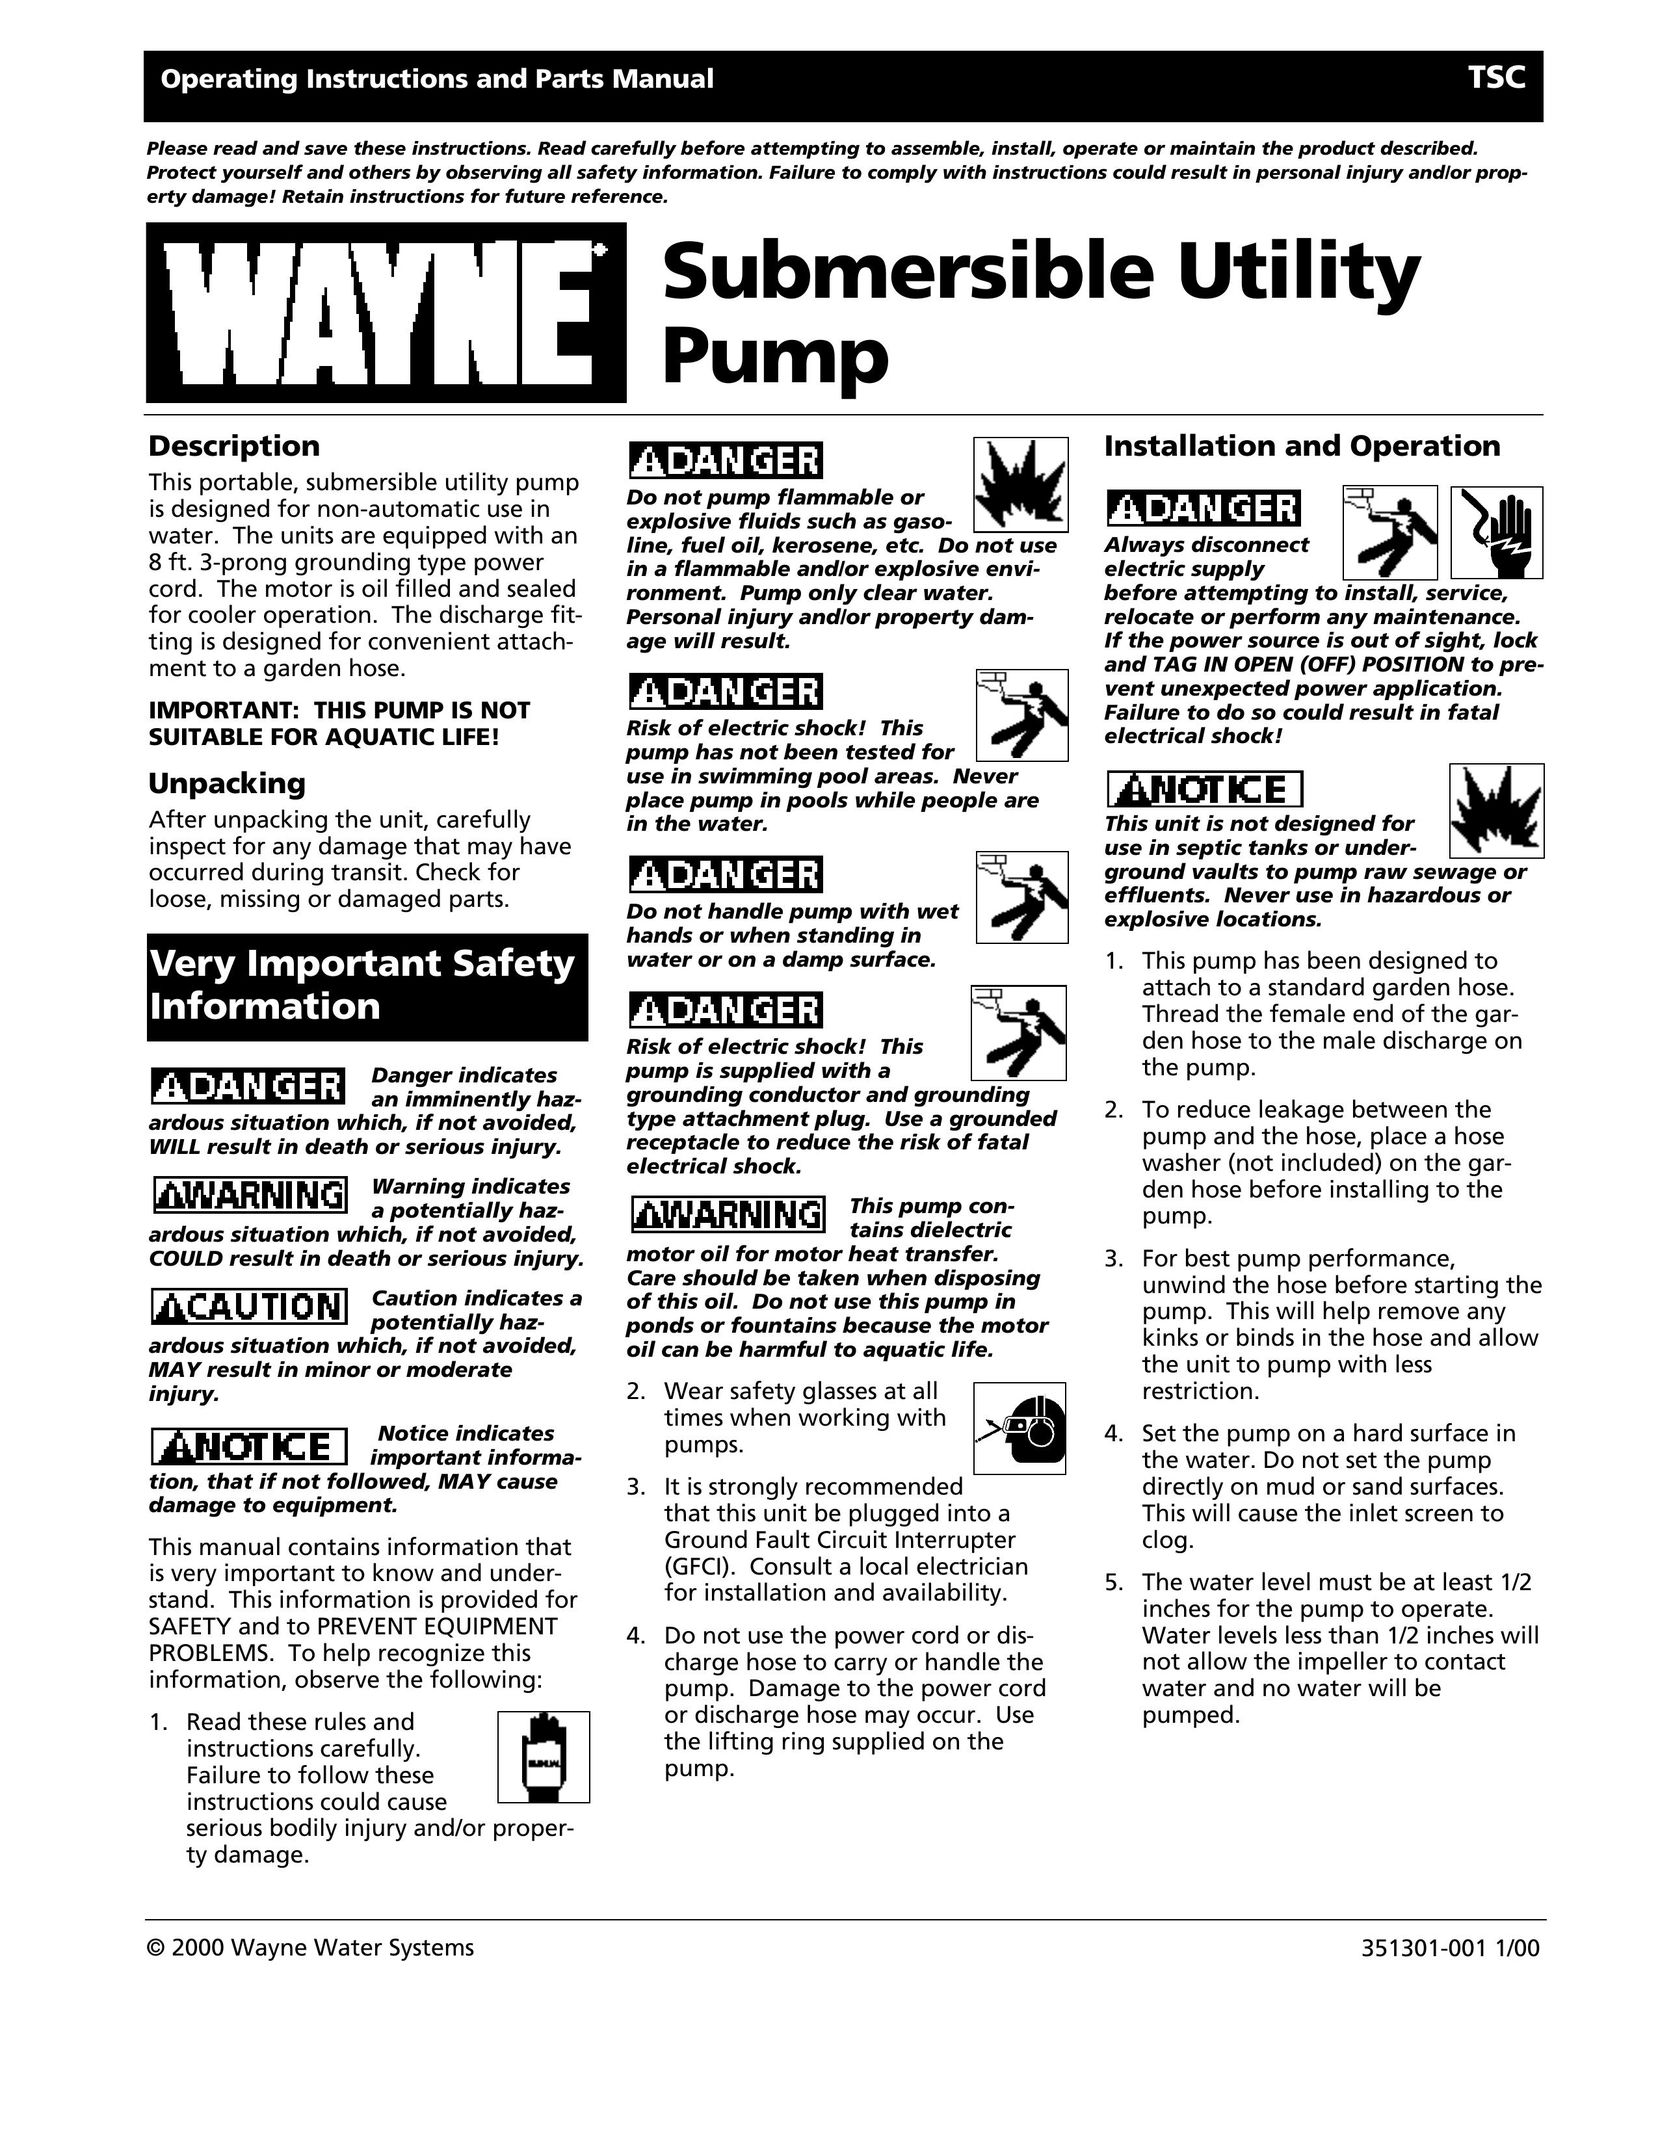 Wayne 351301-001 Septic System User Manual